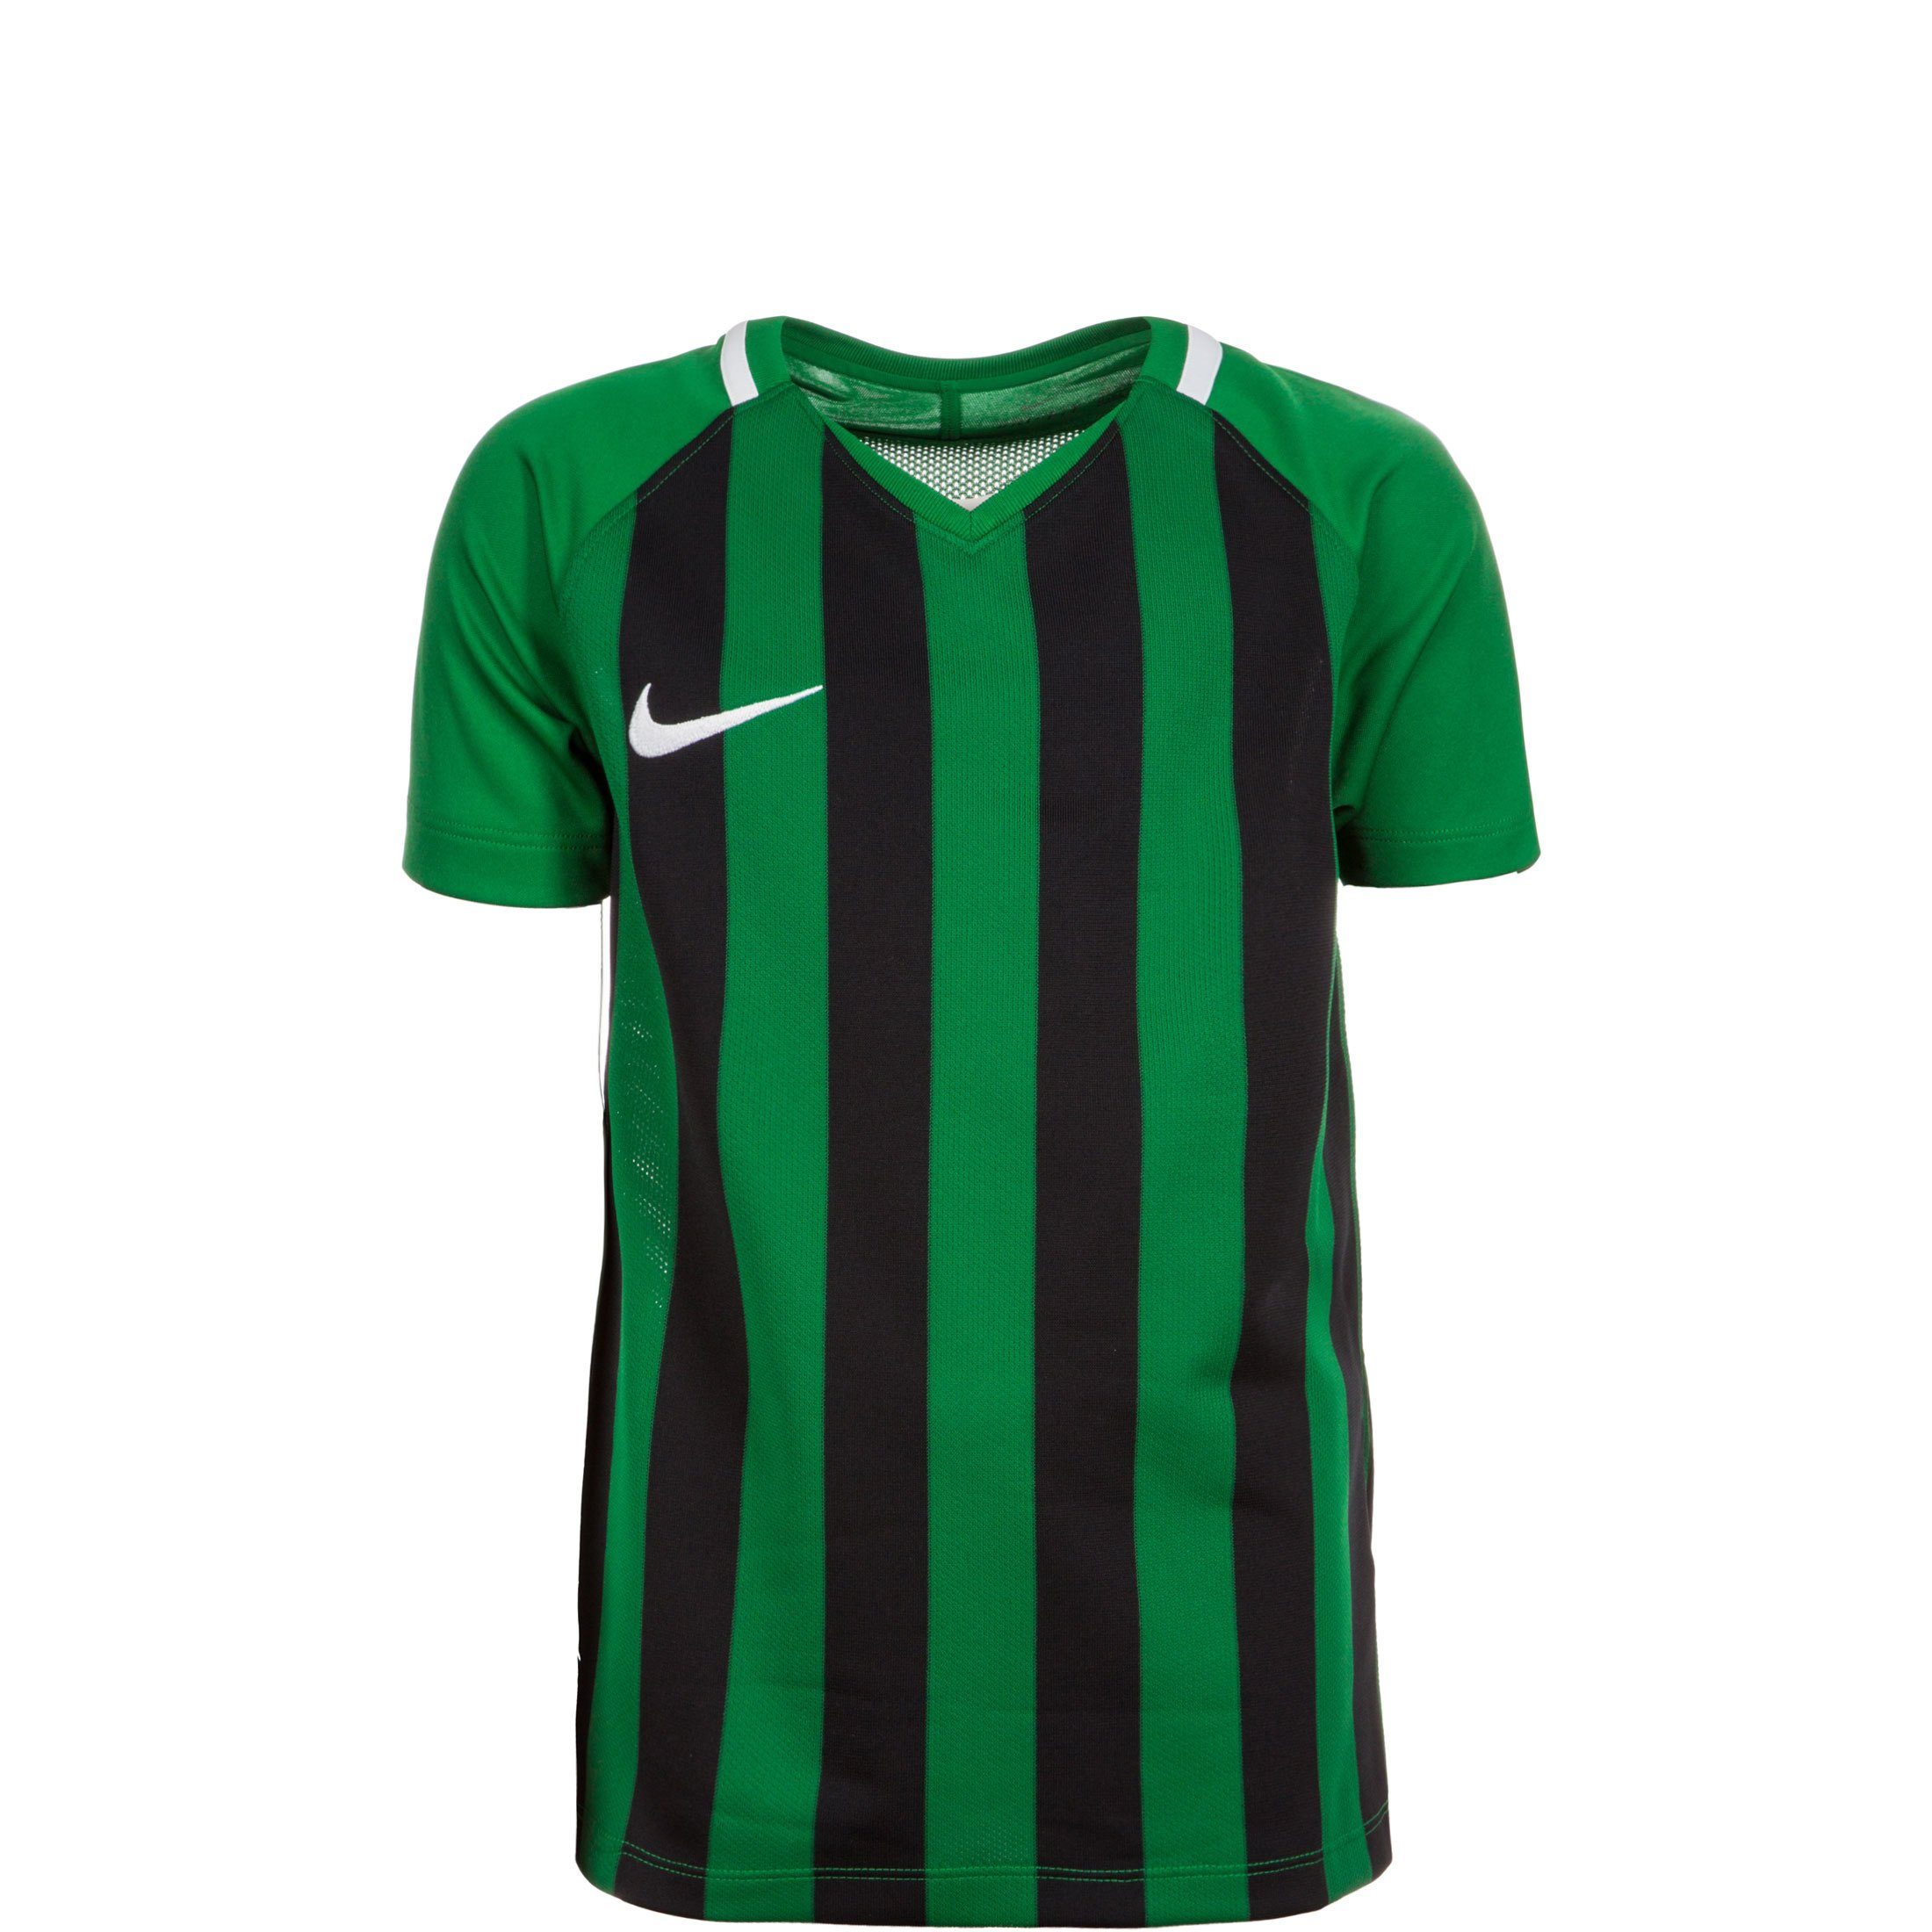 Nike Fußballtrikot »Striped Division Iii« kaufen | OTTO